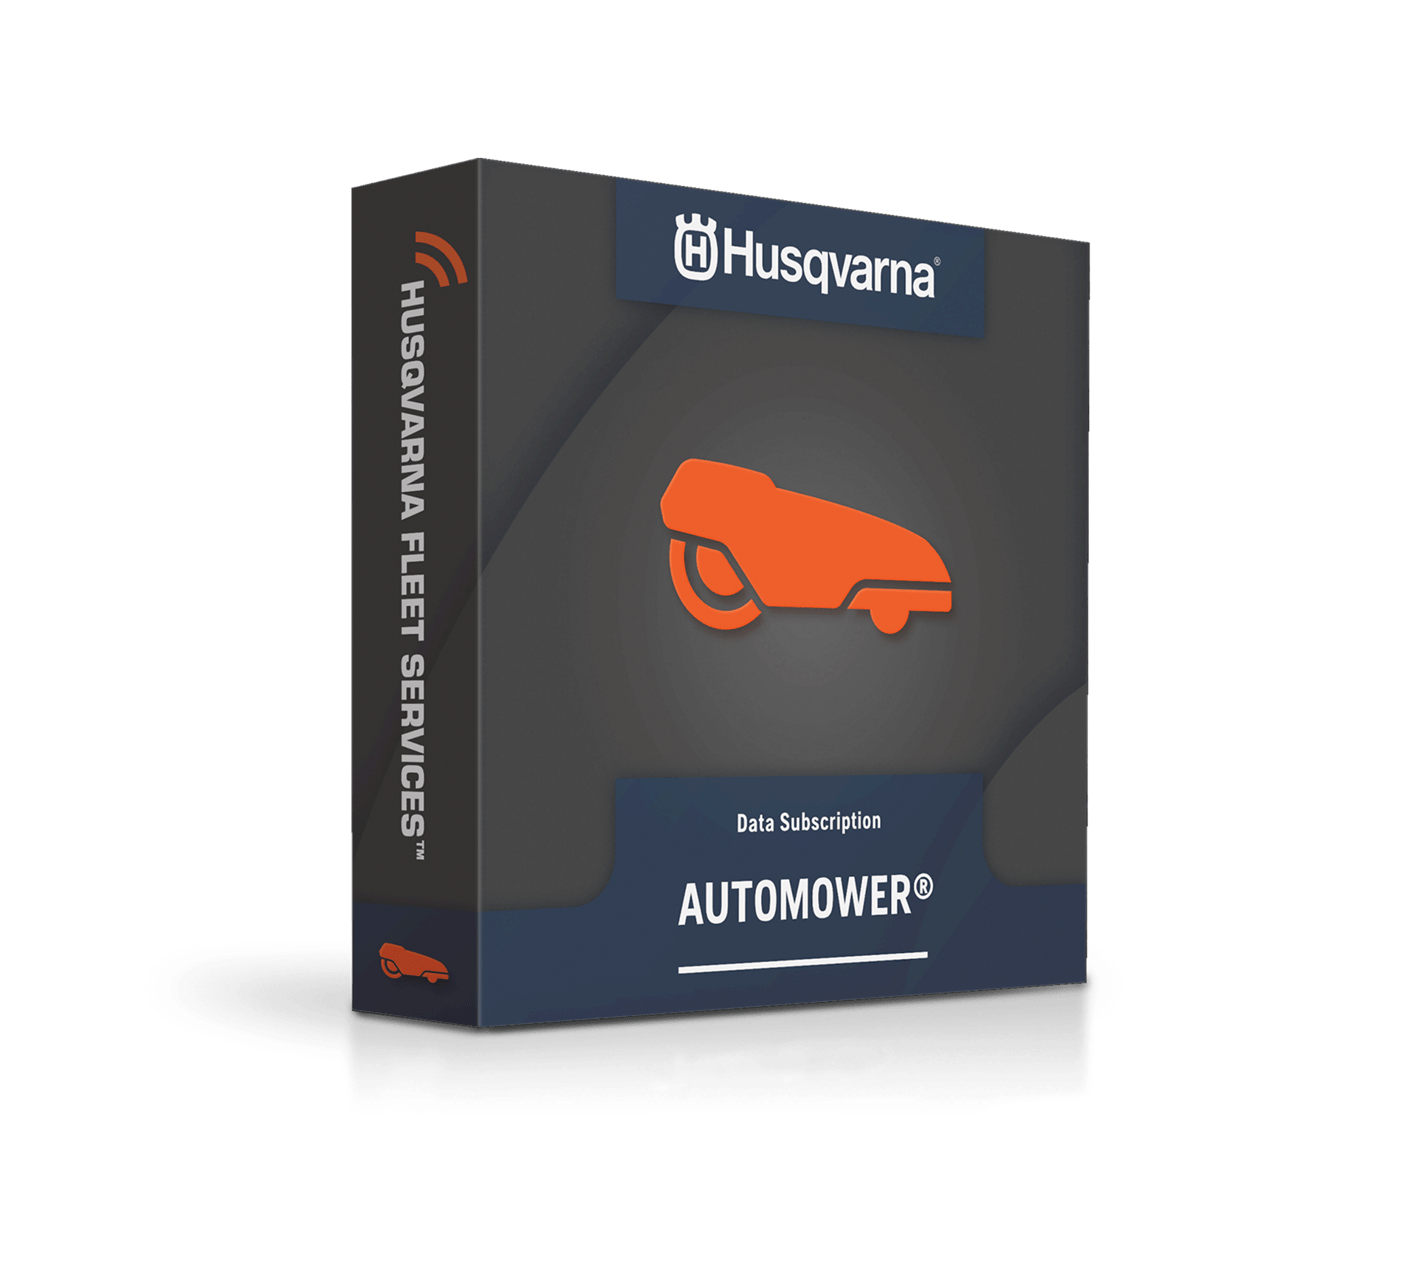 Husqvarna Fleet Services Automower subscription